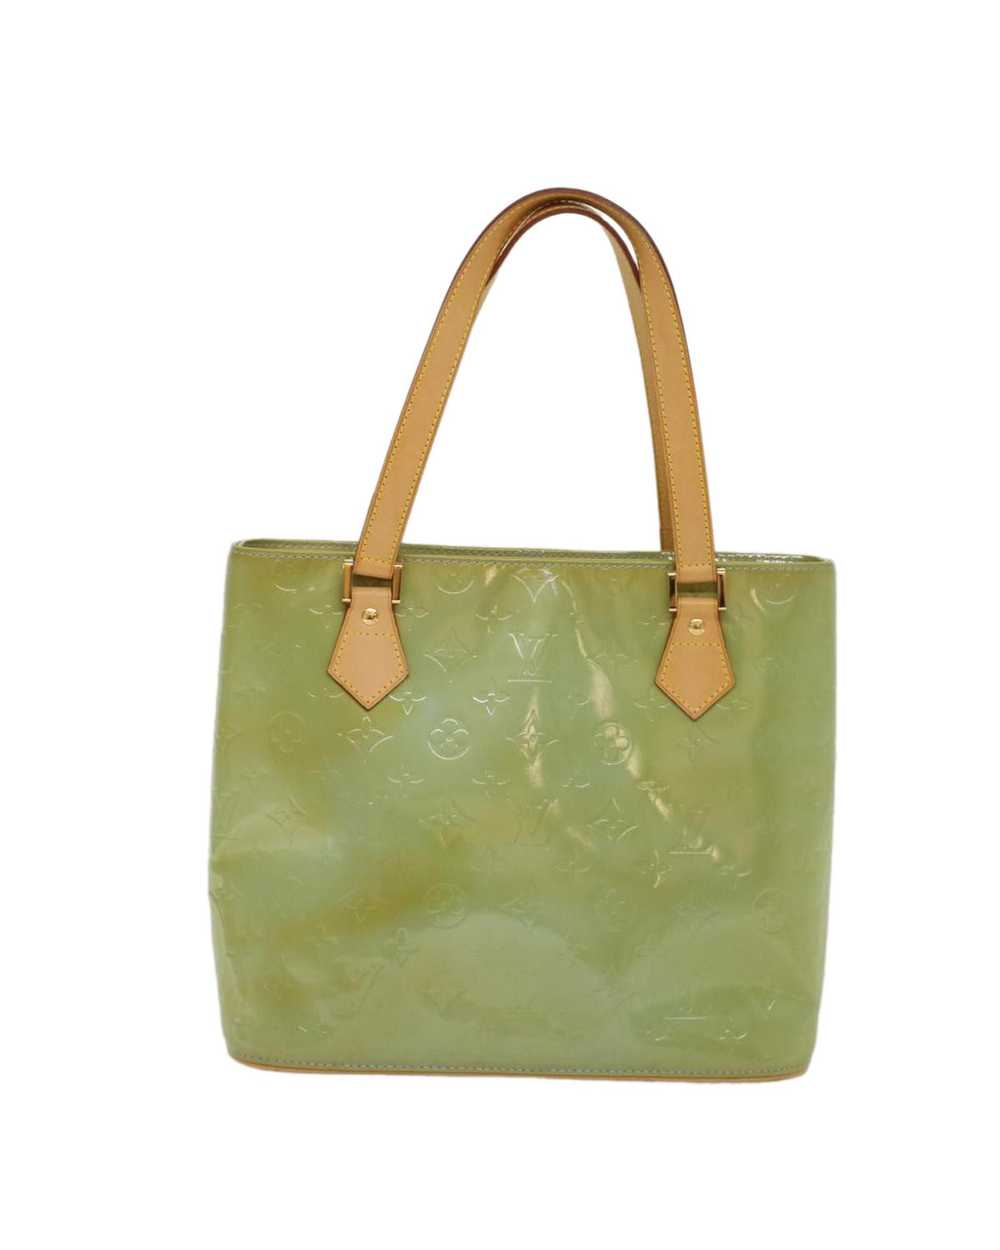 Louis Vuitton Green Patent Leather Handbag - image 2